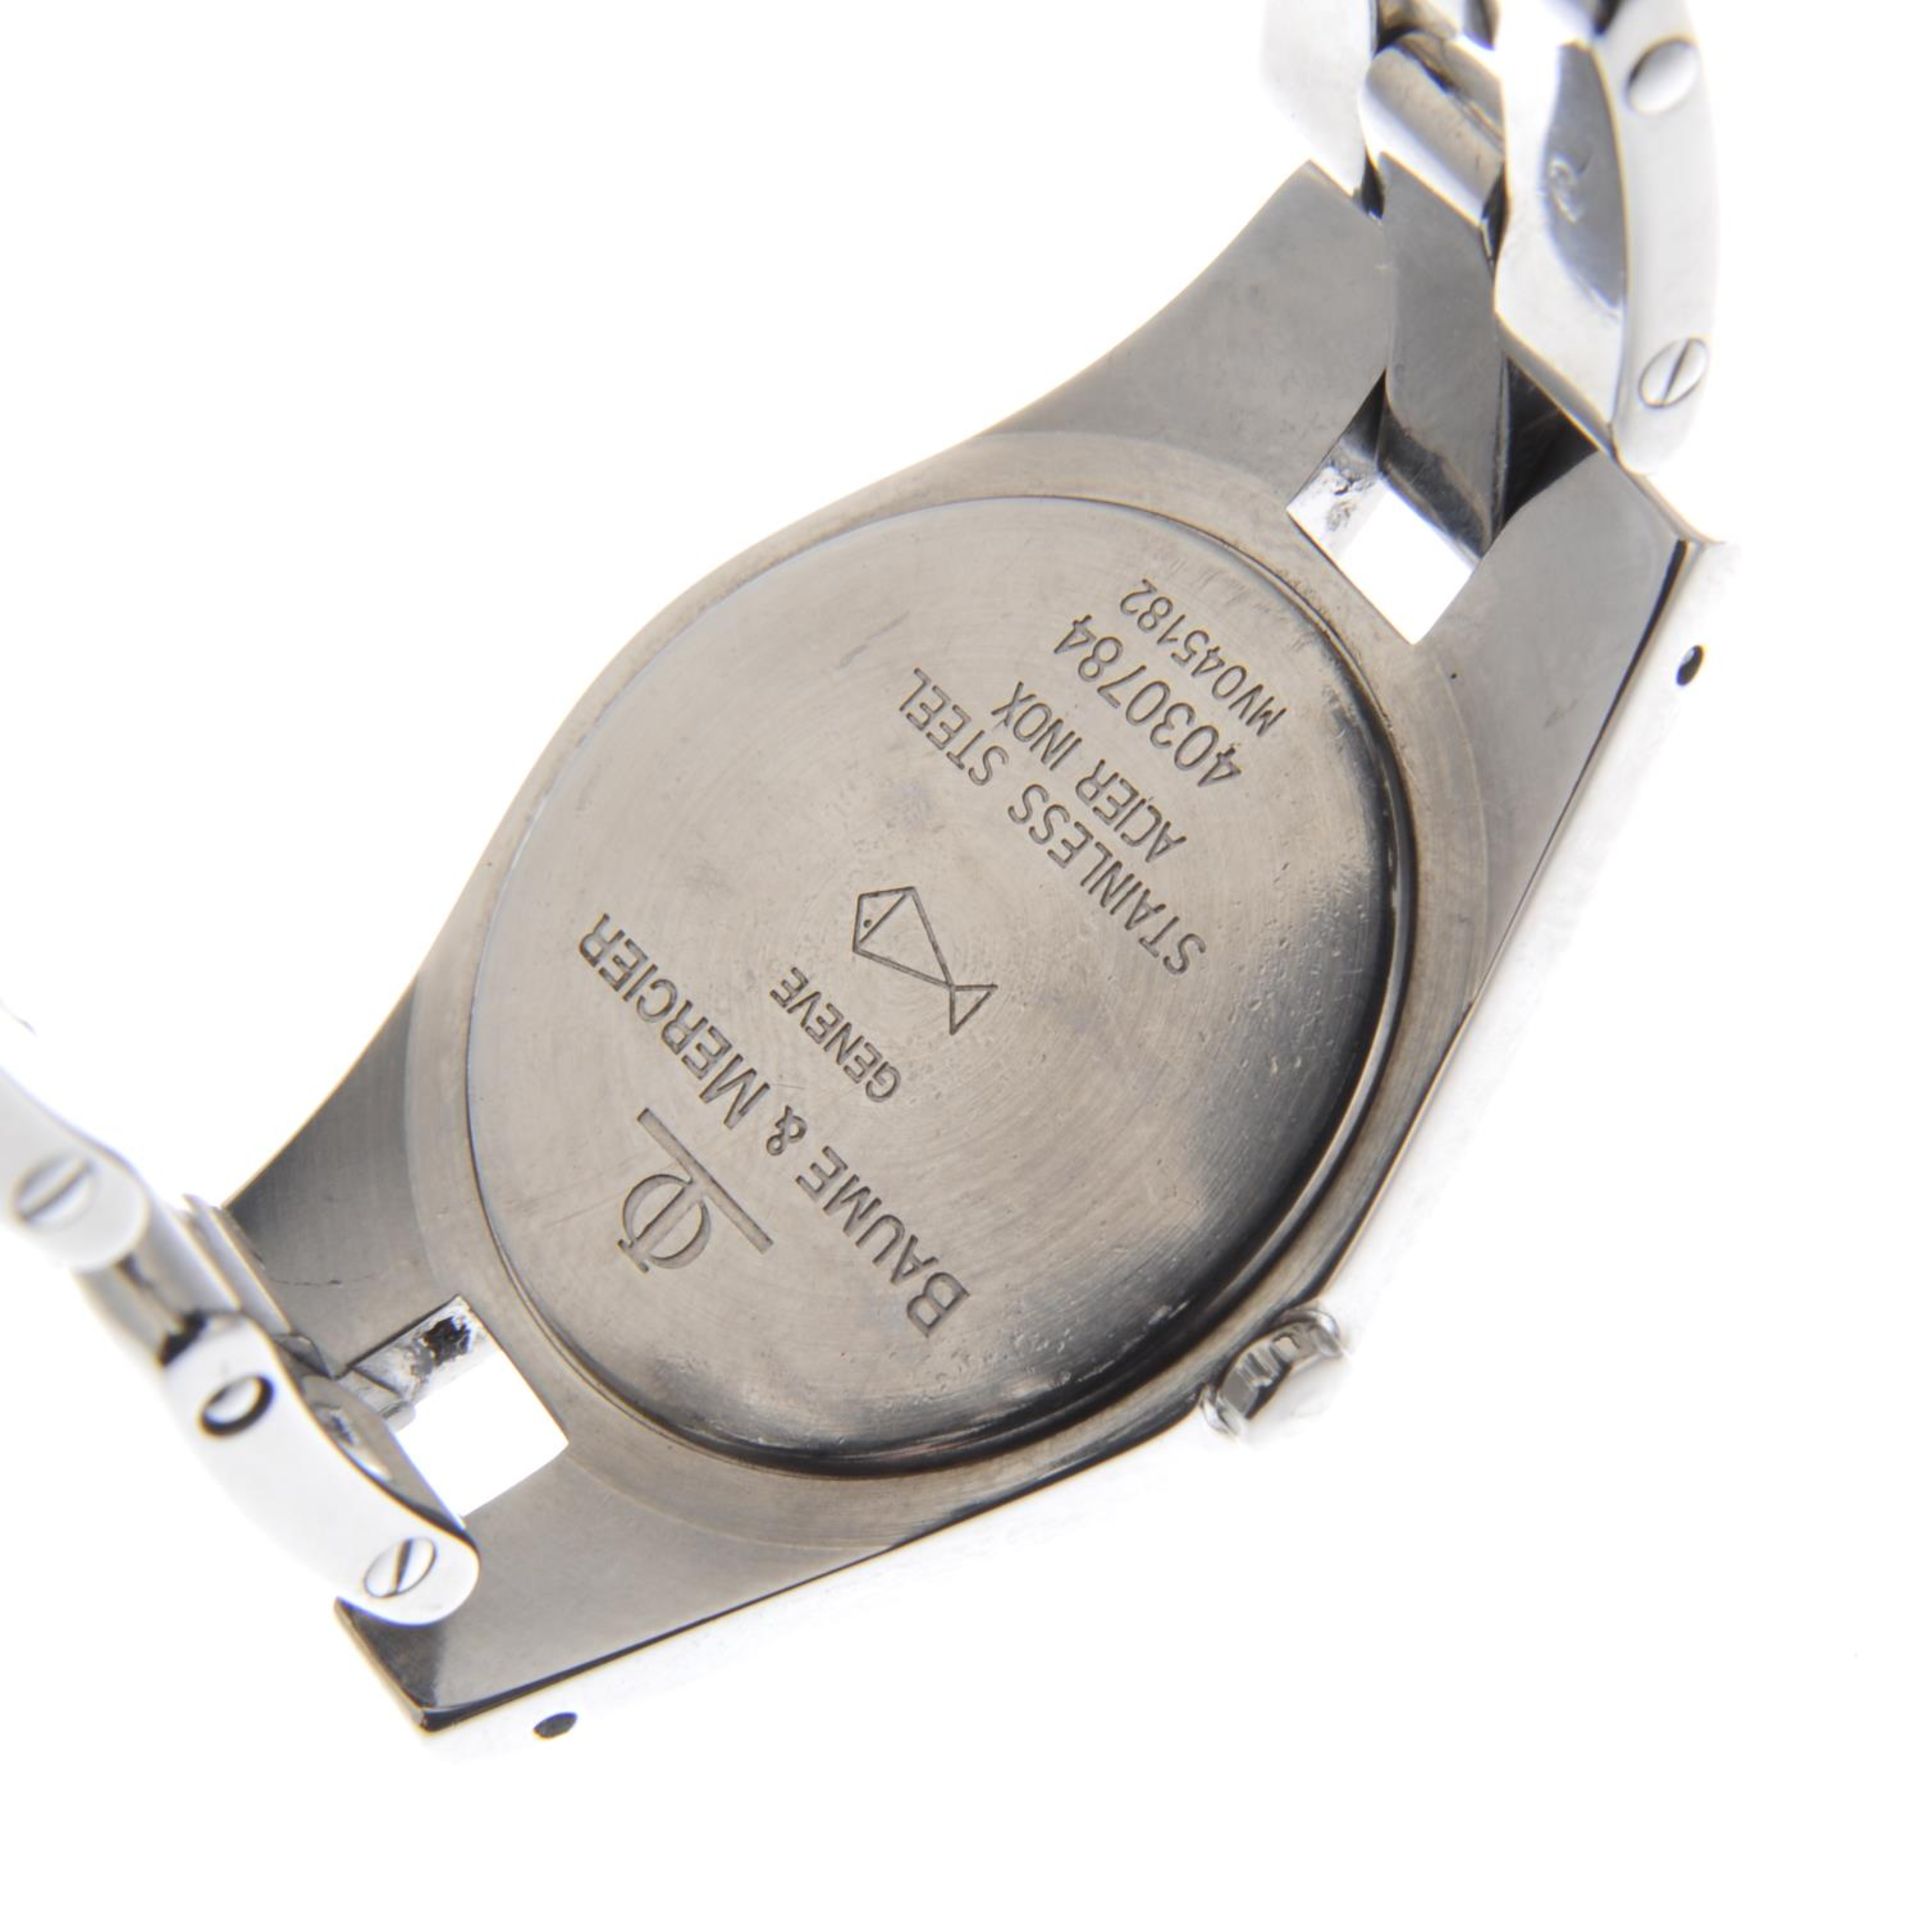 BAUME & MERCIER - a lady's Linea bracelet watch. - Image 4 of 4